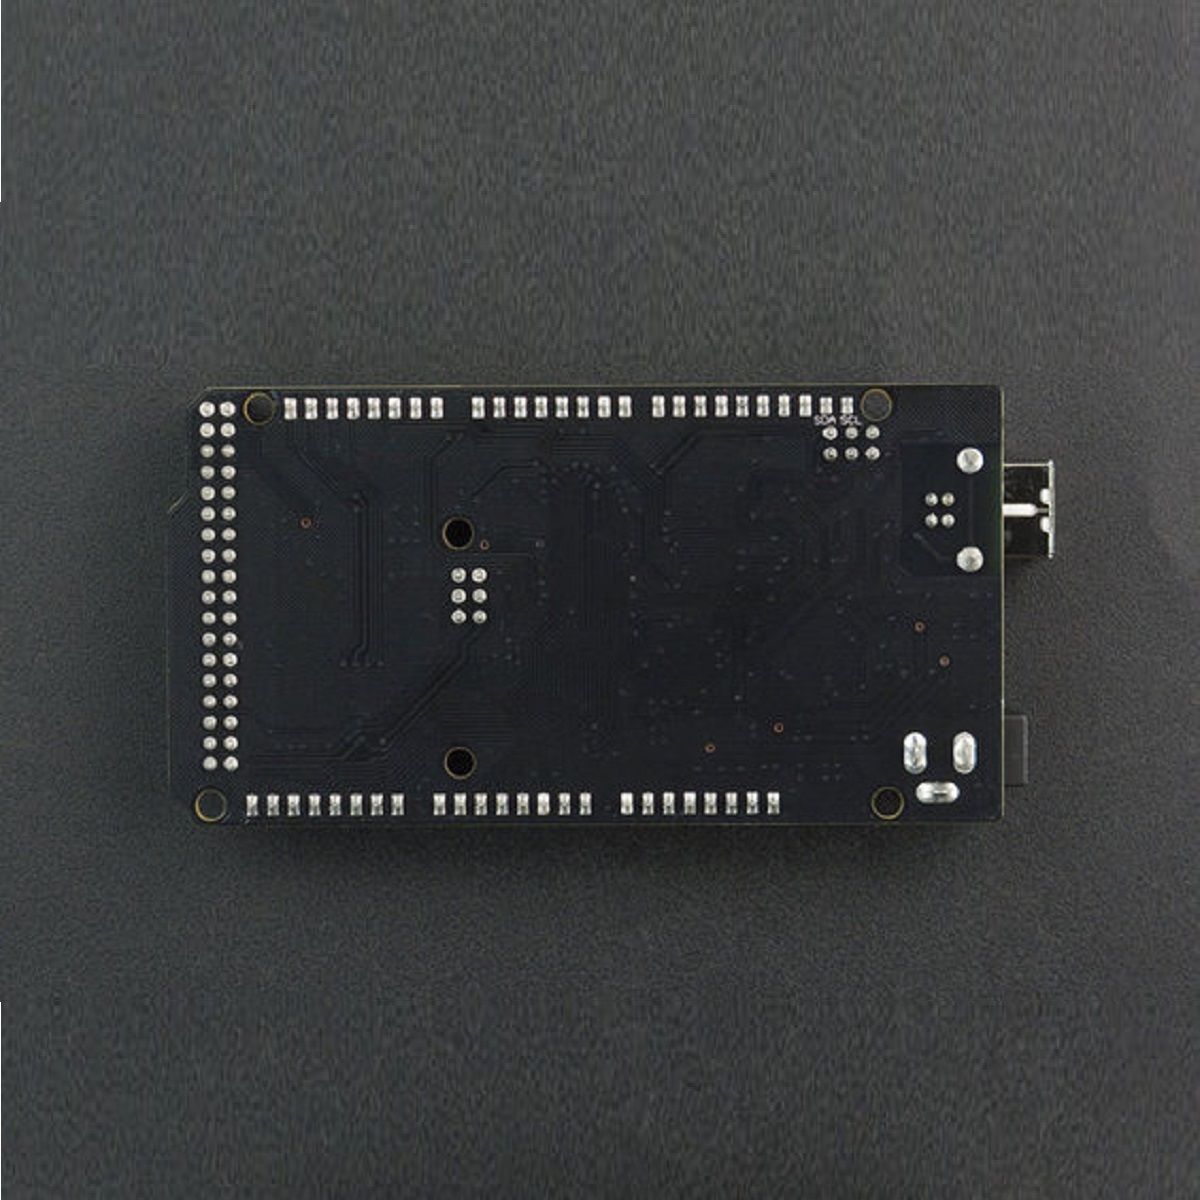 DFRduino Nano (Arduino Nano Compatible) - DFRobot